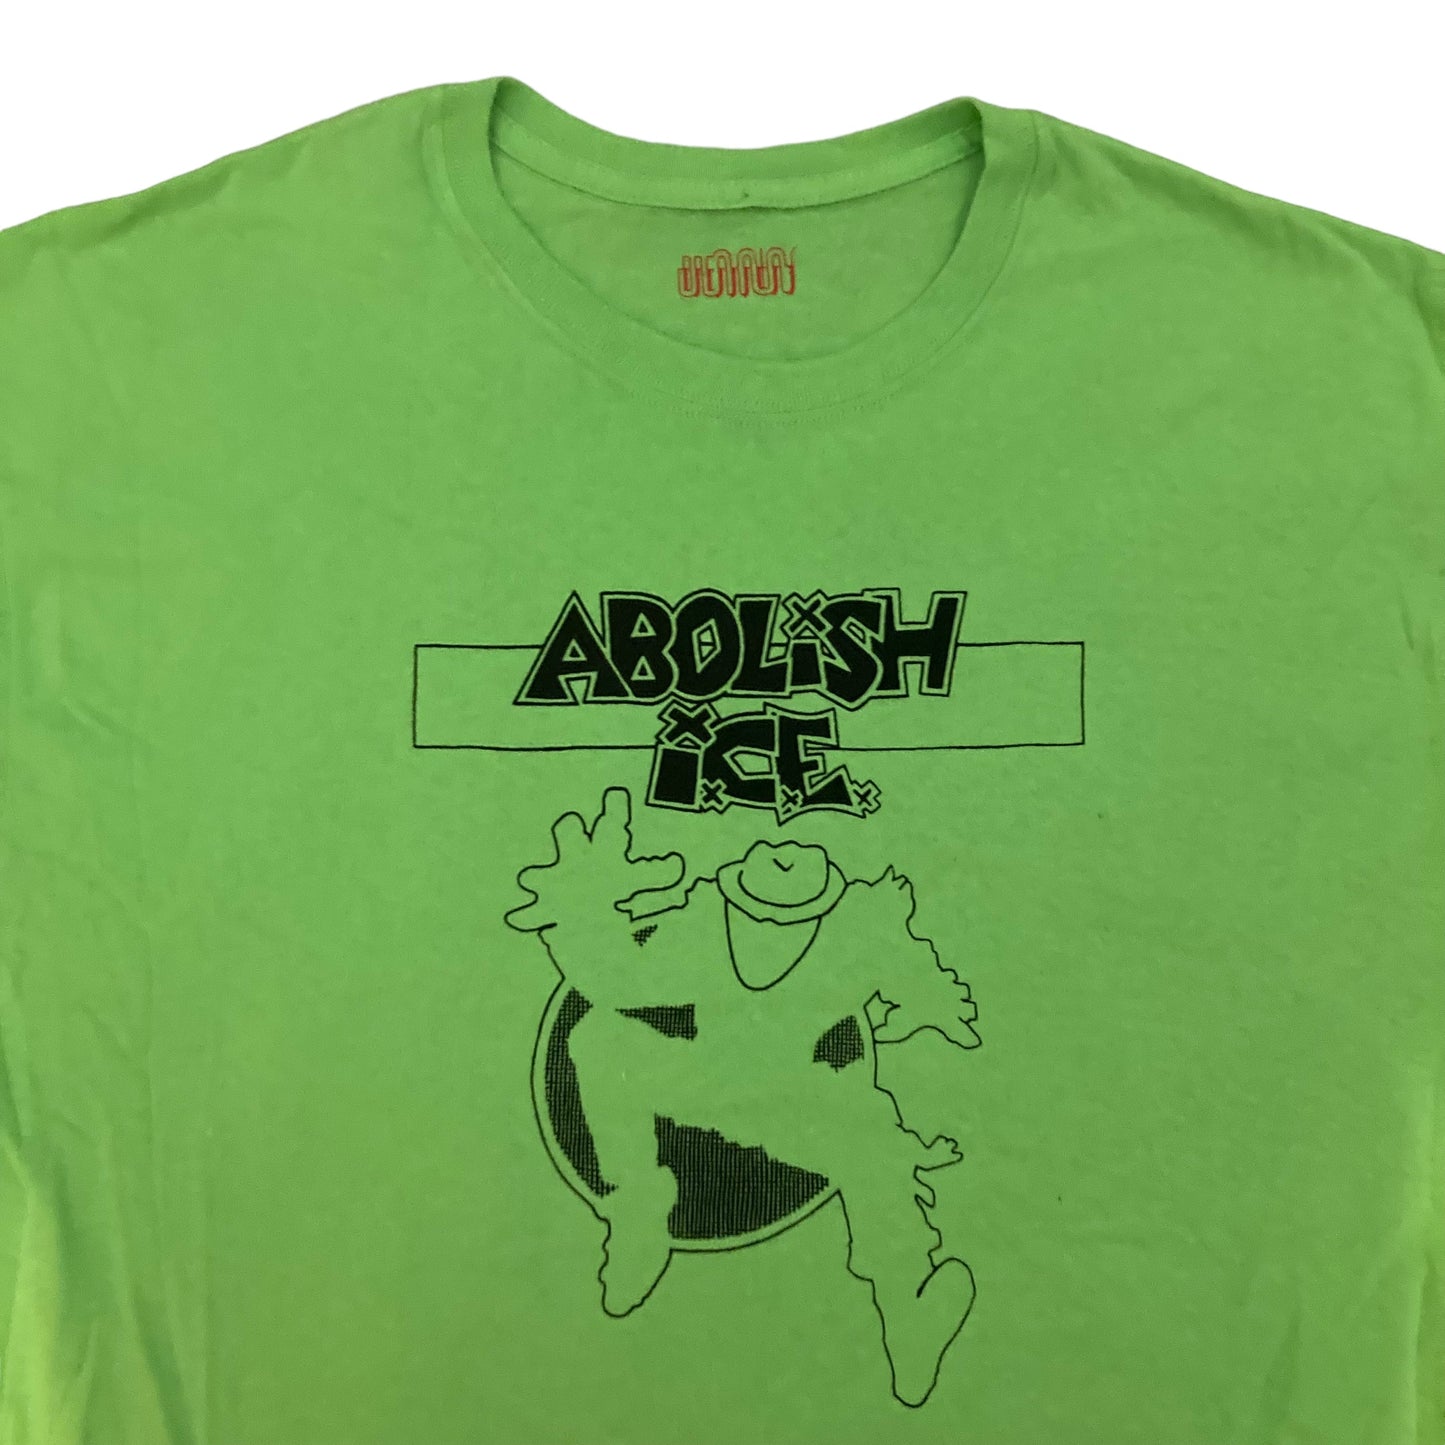 Abolish I.C.E. Shirt - One of a Kind - Neon Green (XL)